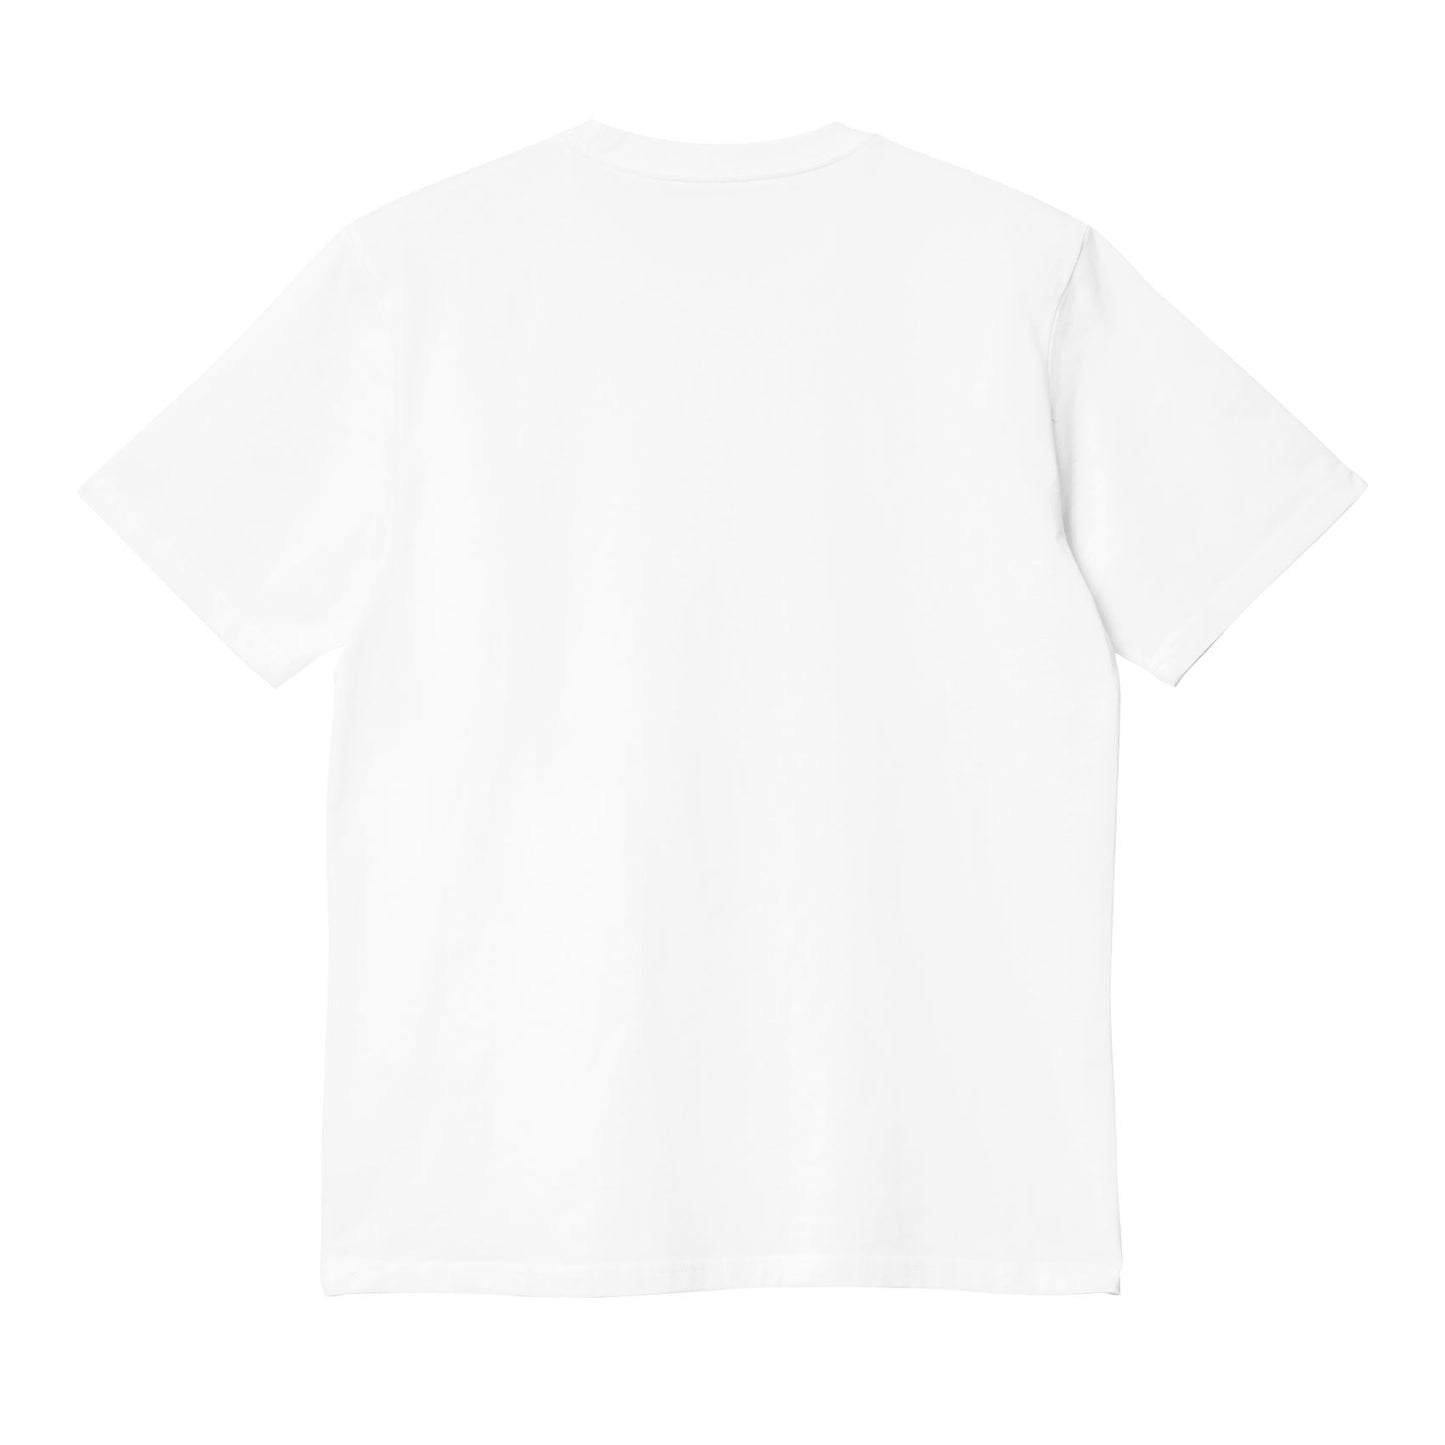 Carhartt WIP Base T-Shirt White/Black